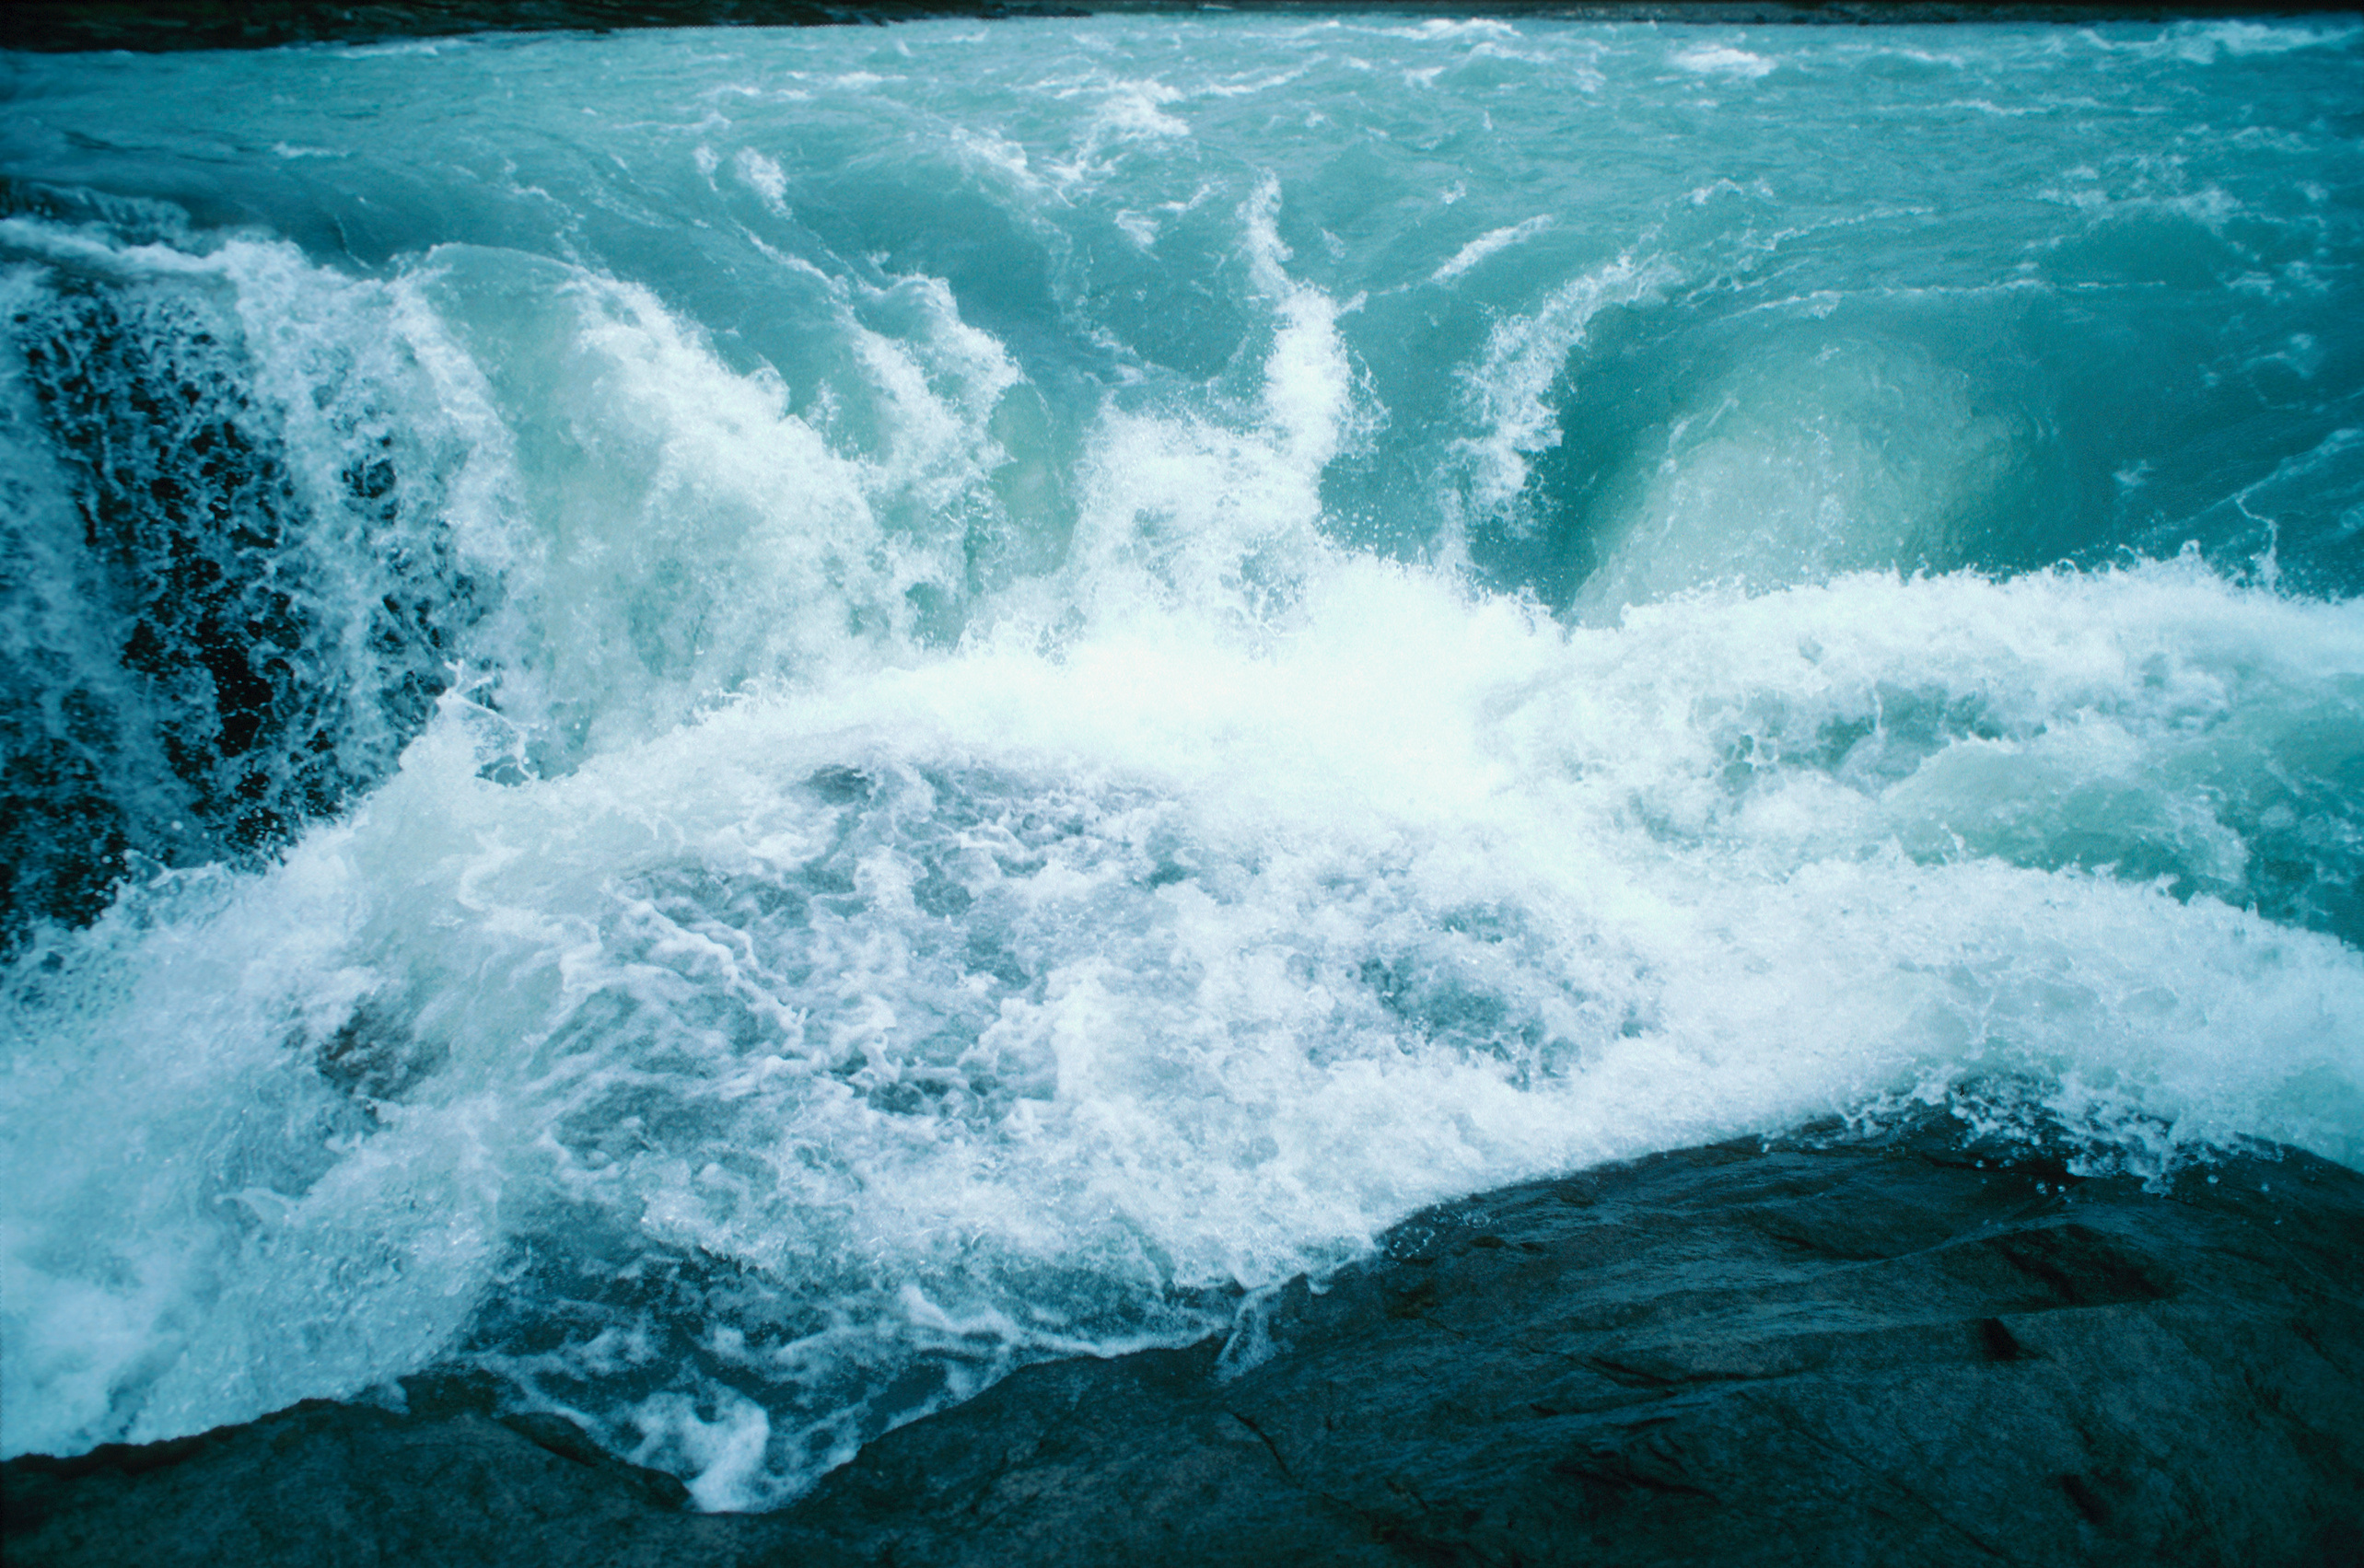 Turbulent river rapids